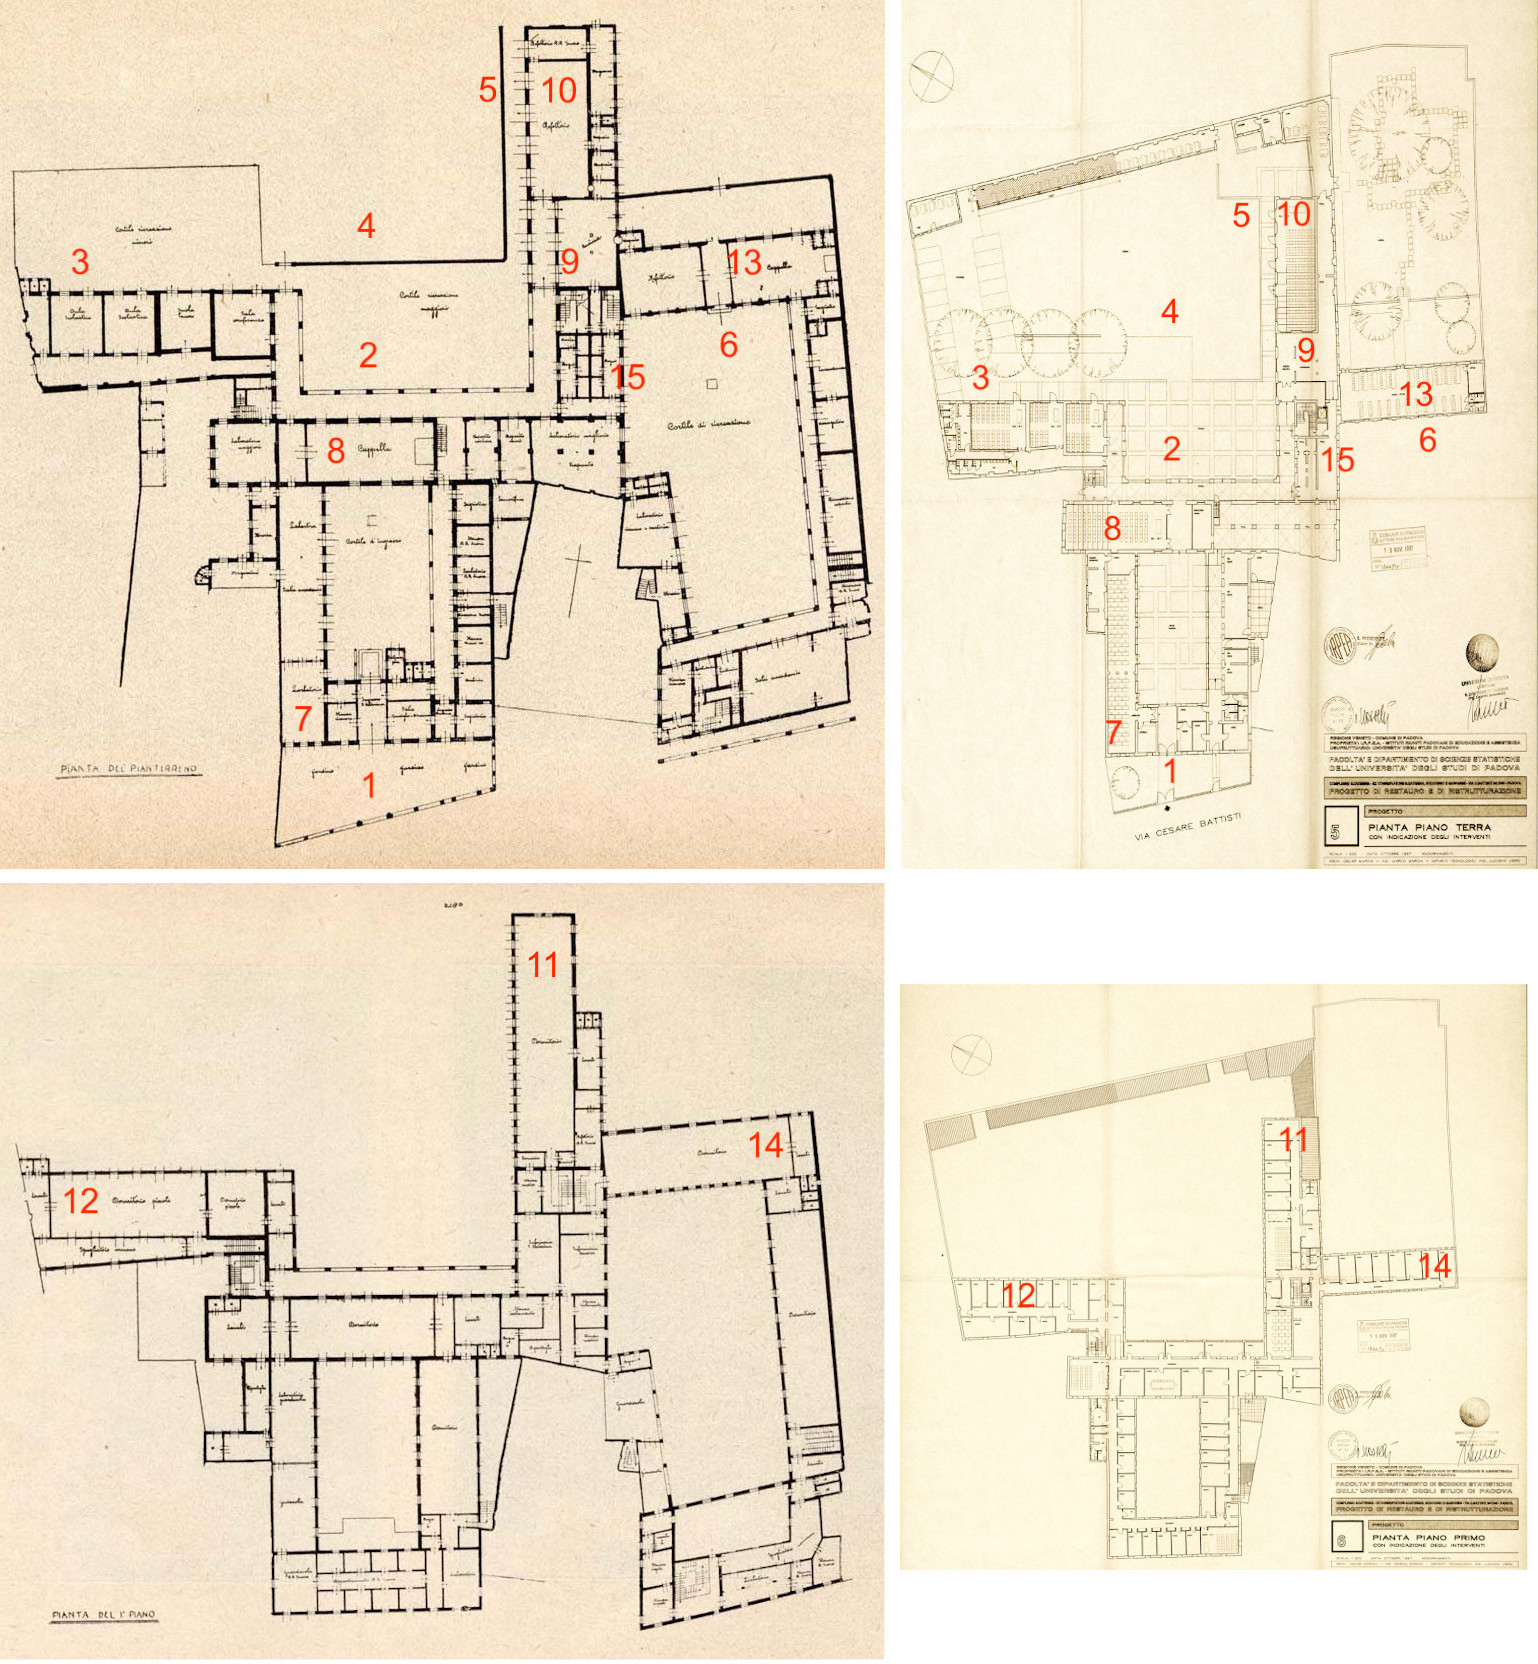 Planimetries of the complex of Santa Caterina of 1930